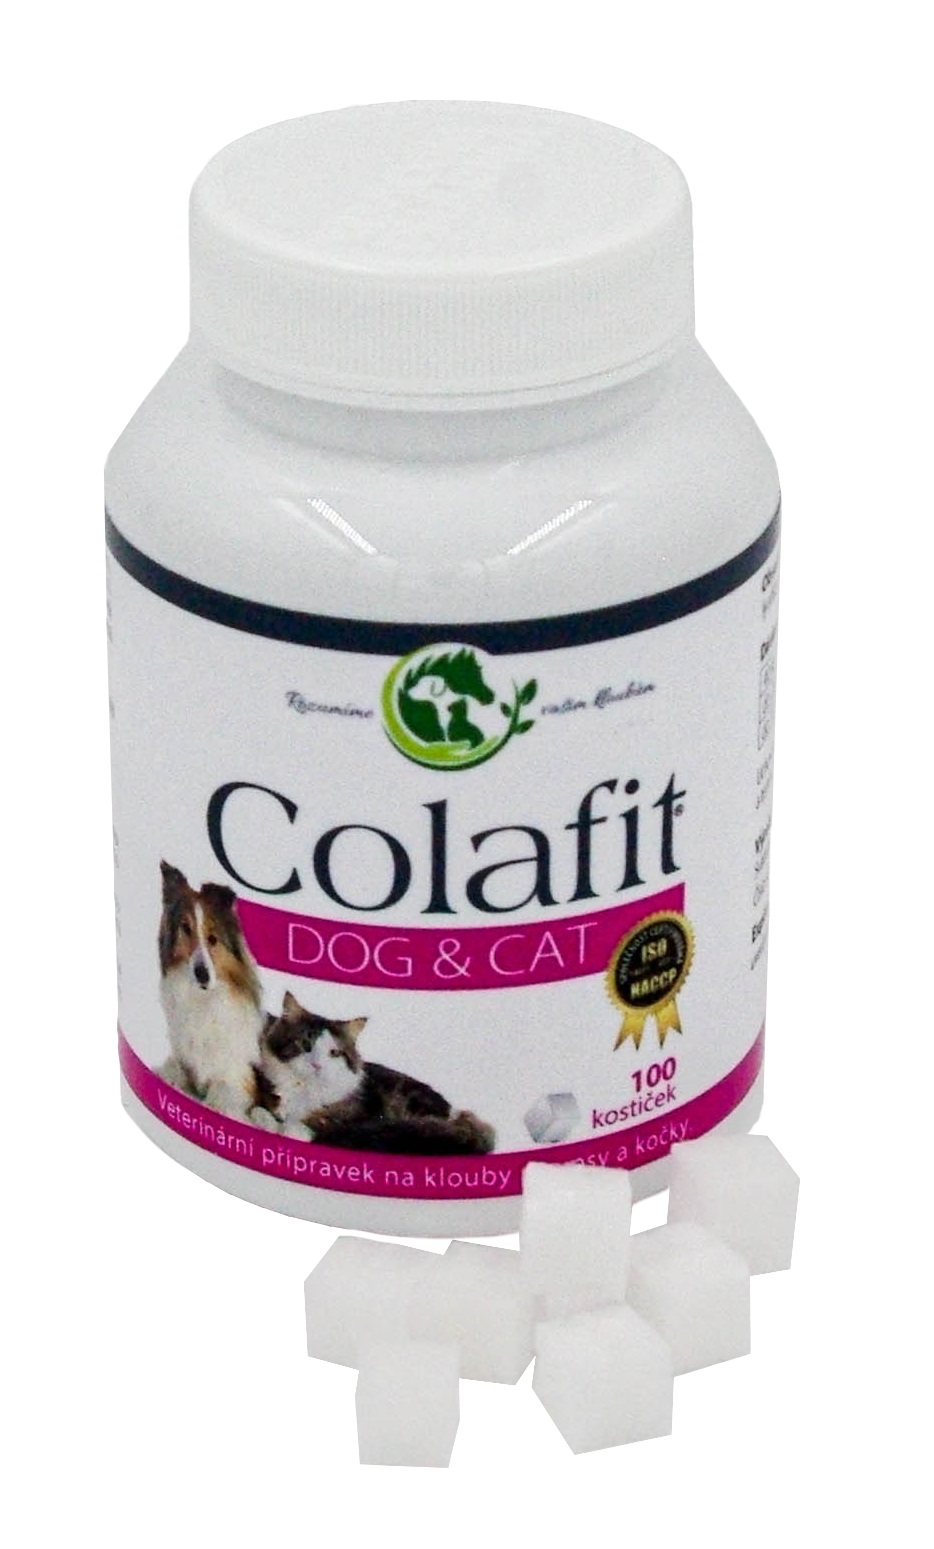 COLAFIT Dog & Cat 100 kost.